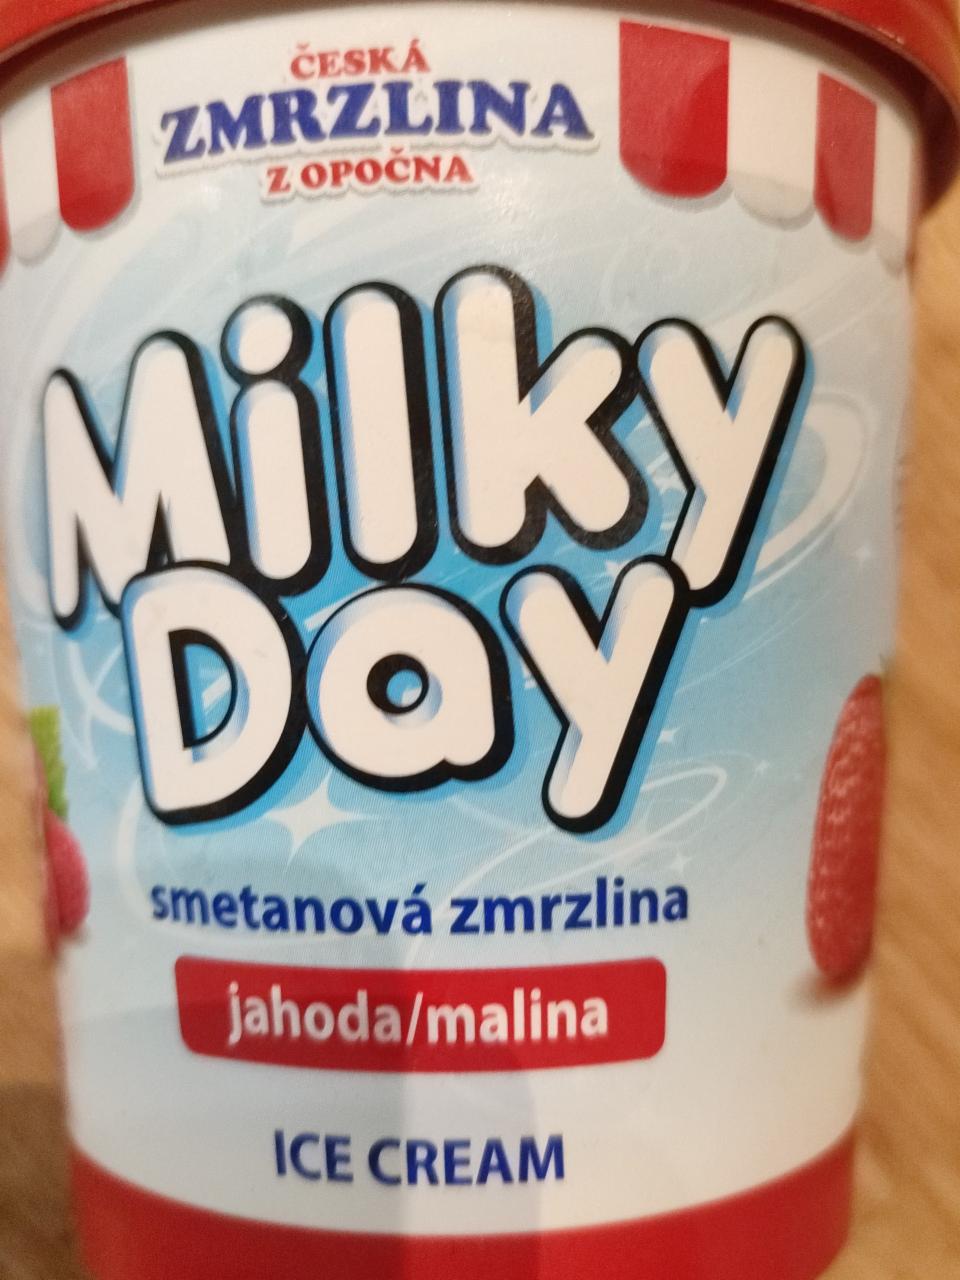 Fotografie - Milky Day smetanová zmrzlina jahoda/malina Česká zmrzlina z Opočna